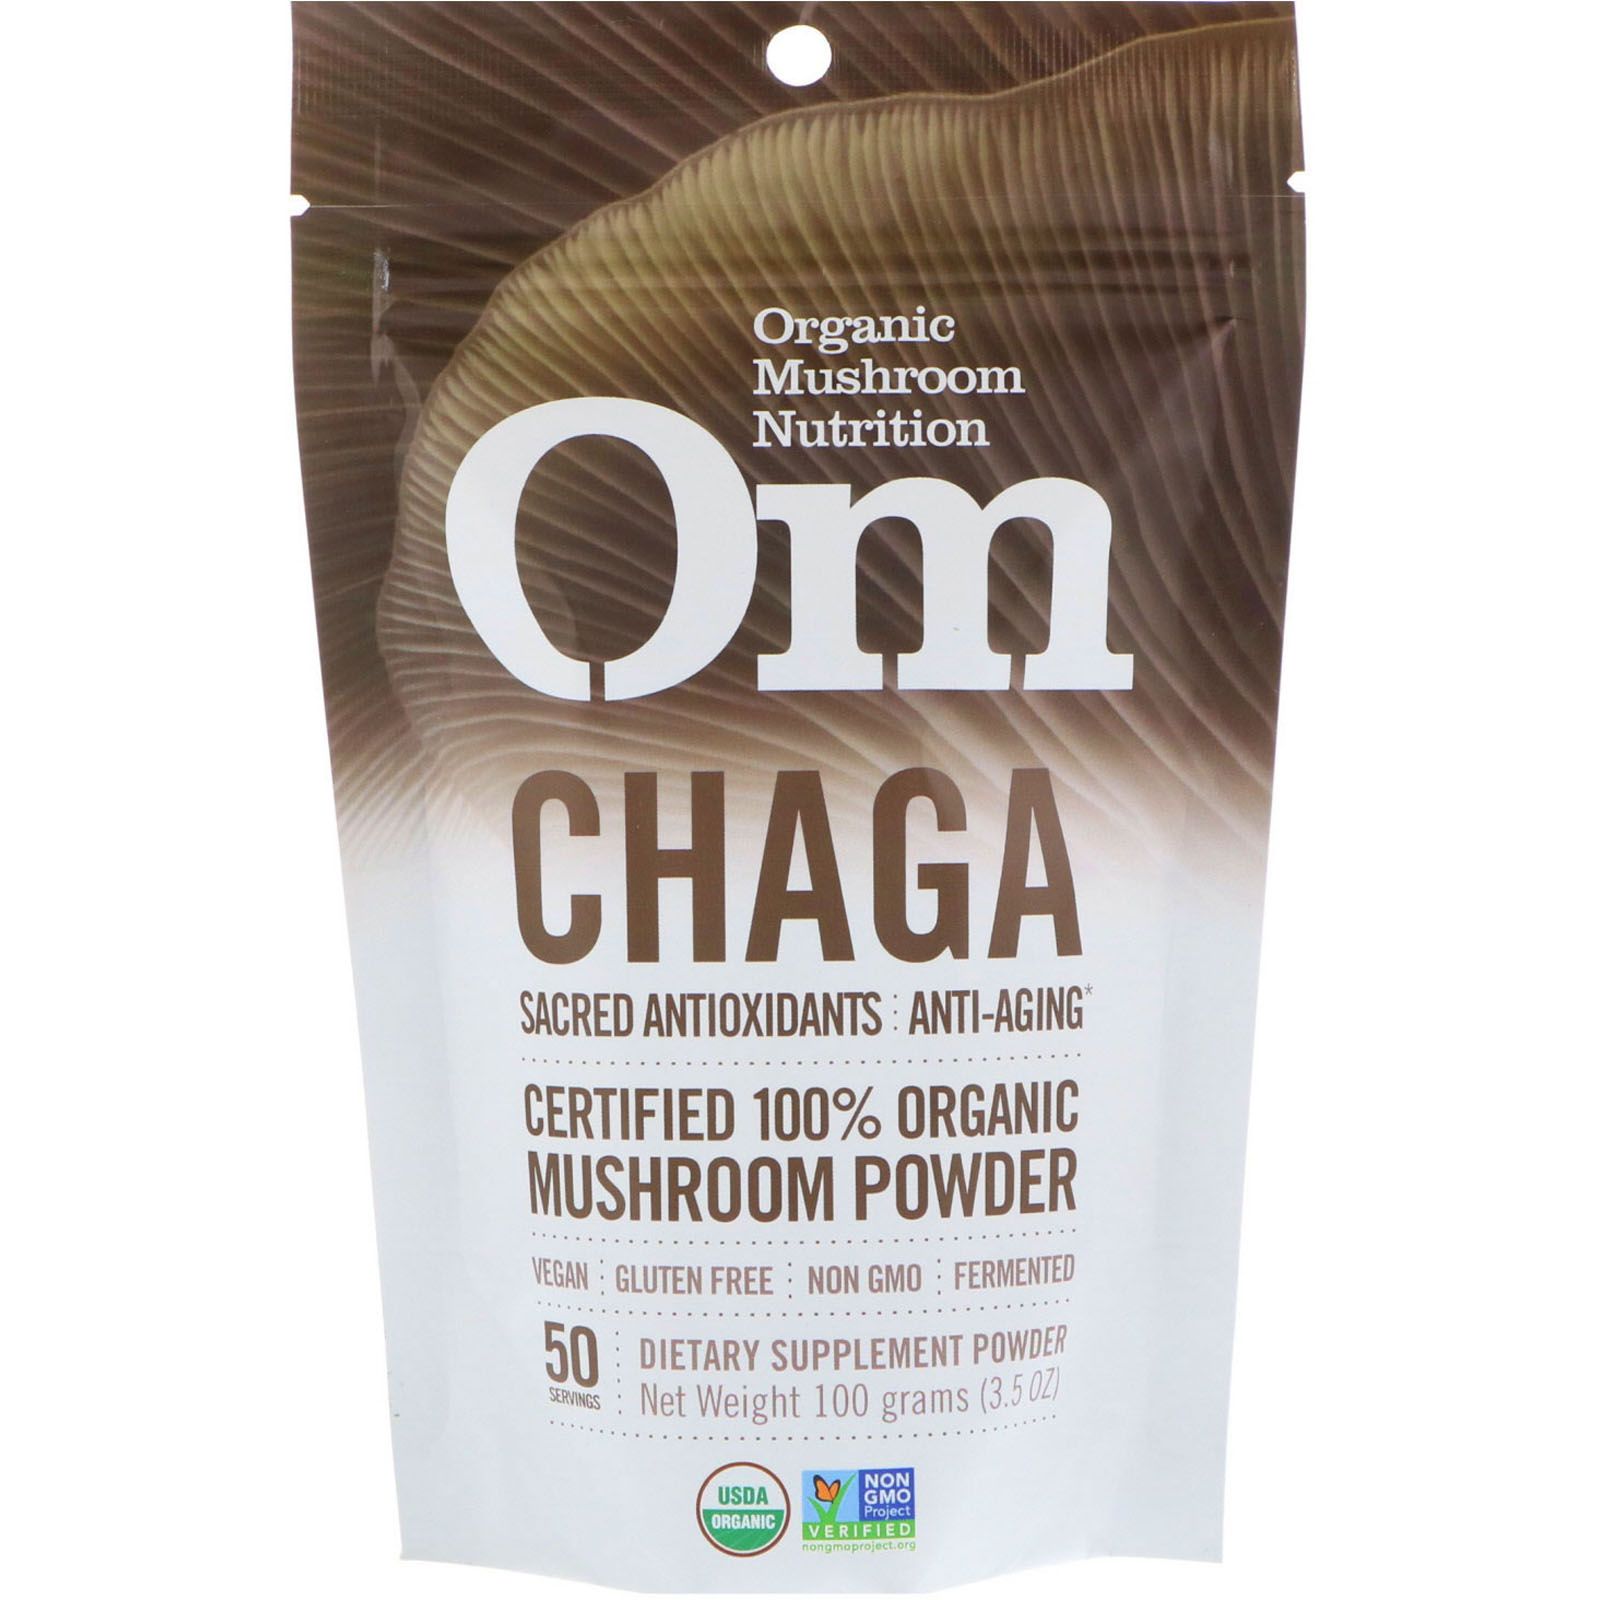 Organic Mushroom Nutrition Chaga Certified 100% Organic Mushroom Powder 3.5 oz (100 g)